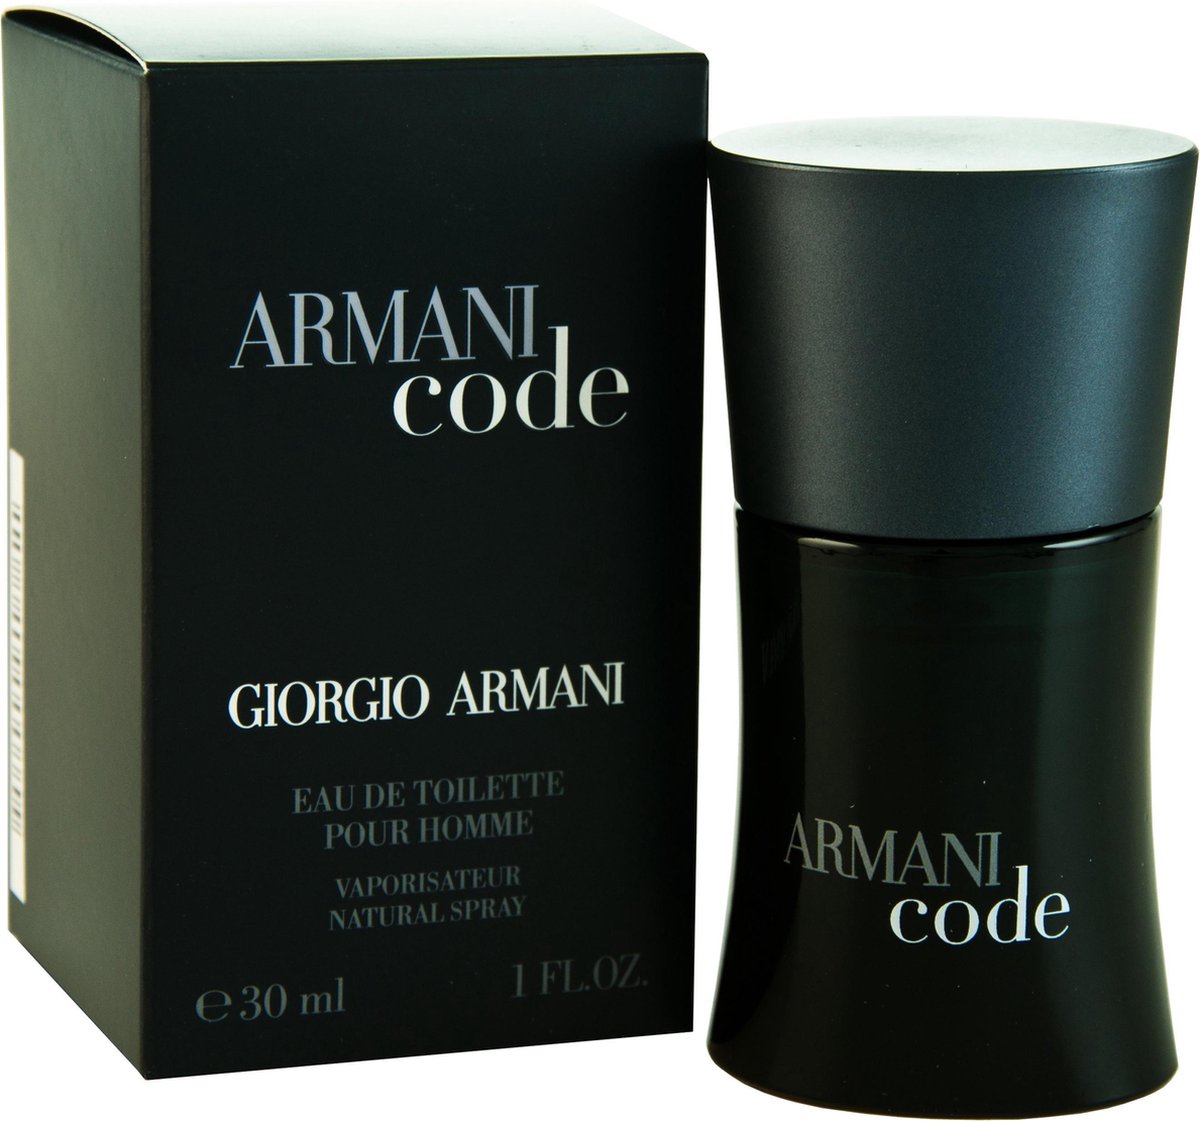 Armani code pour homme. Giorgio Armani туалетная вода Armani code homme. Armani code pour homme EDT 30ml. Armani code 30ml. Giorgio Armani code pour homme.